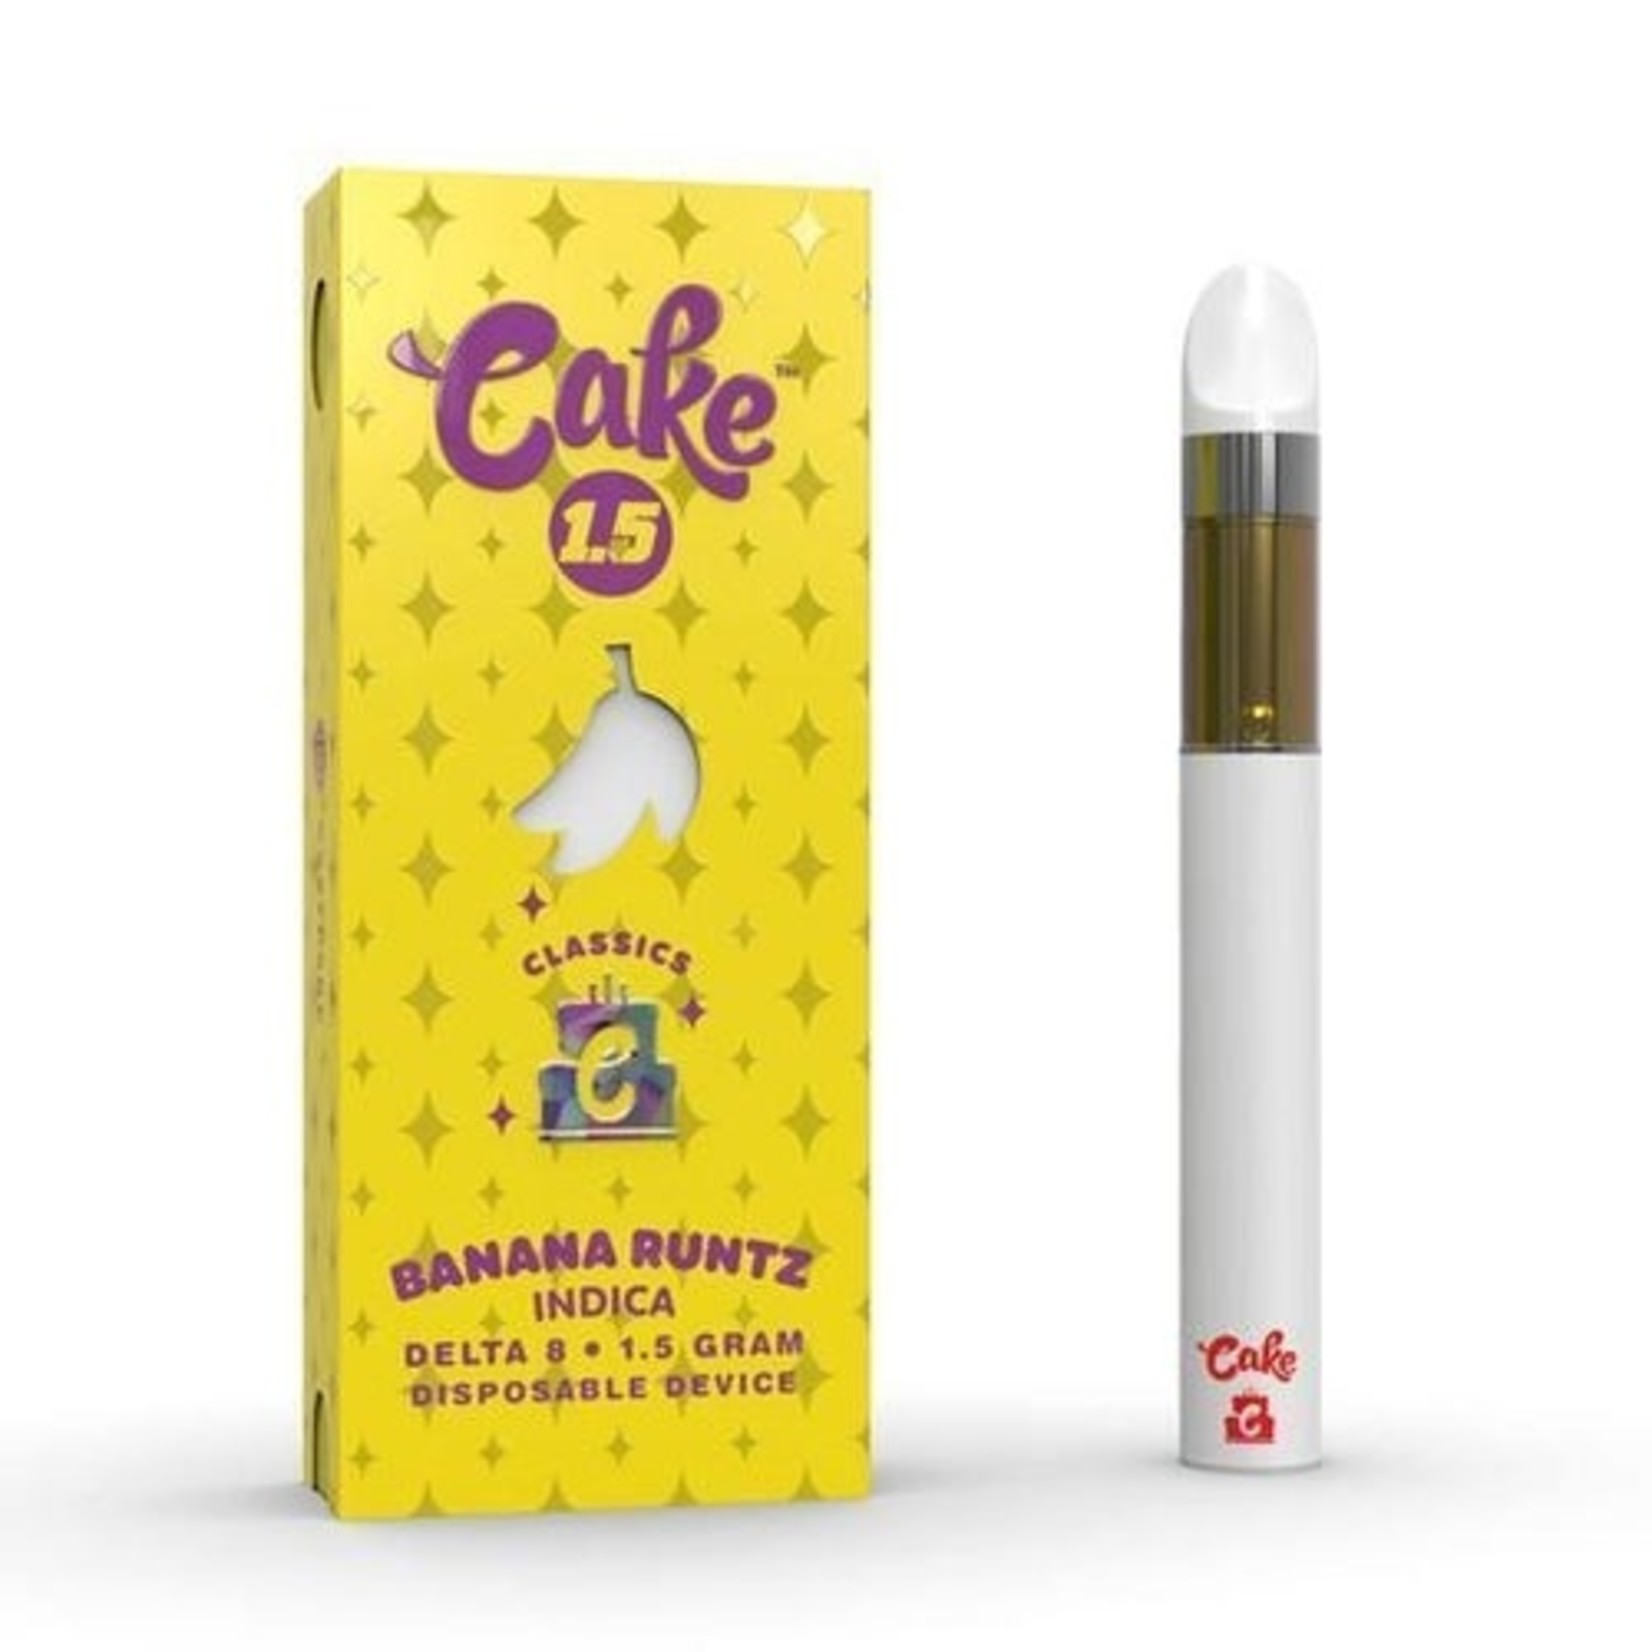 CAKE Cake - Classic Delta 8 Disposable 1.5g Device - Banana Runtz